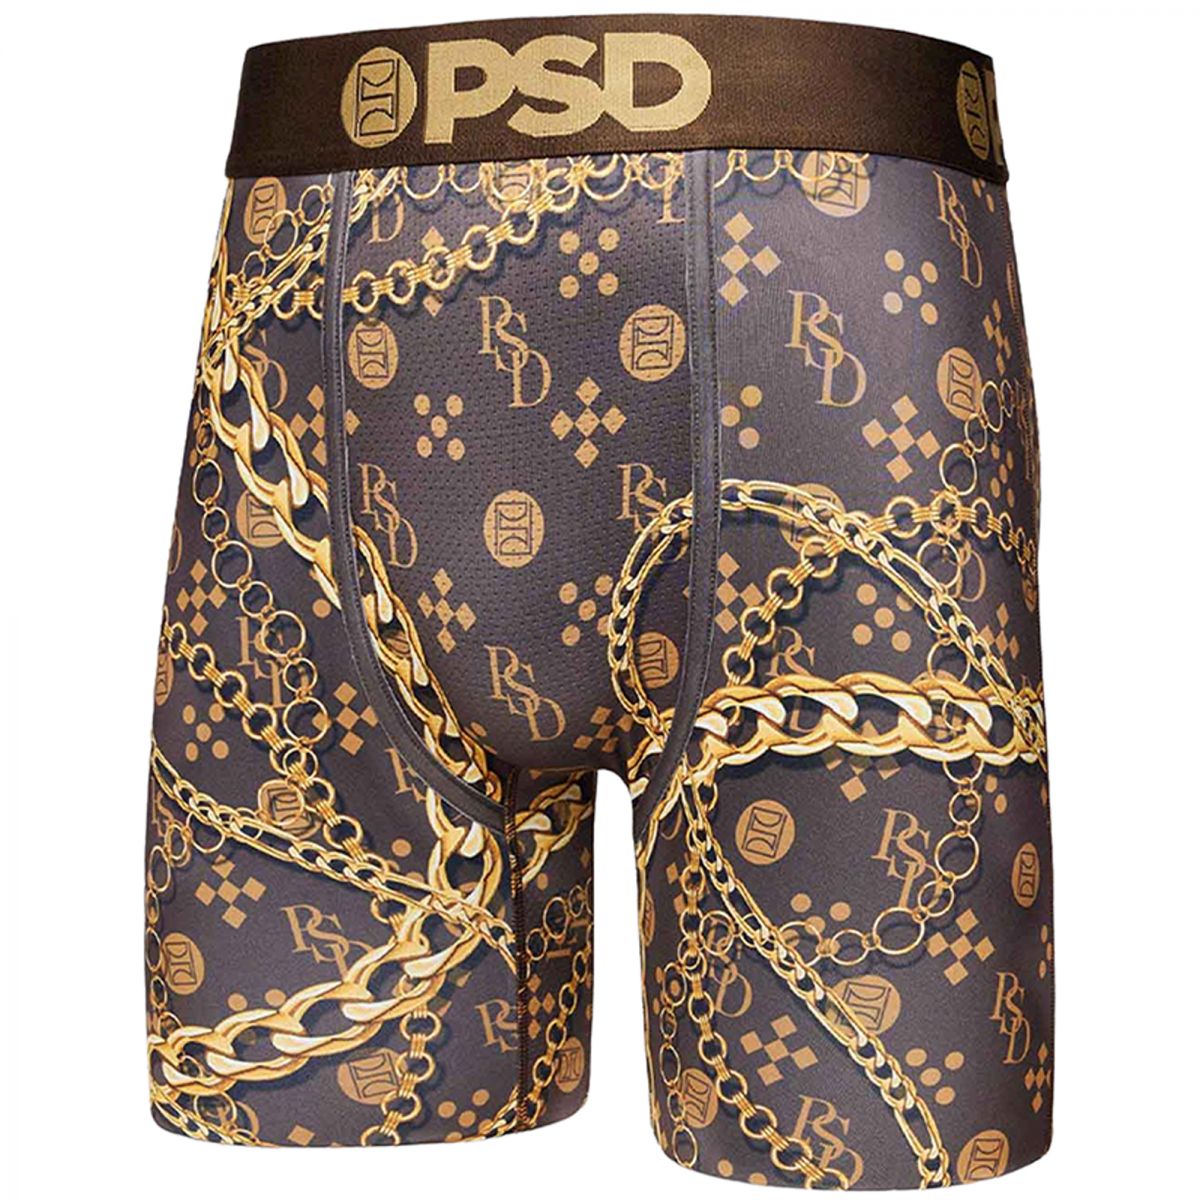 PSD Men's Love More Underwear, Size XL, Polyester/Elastane/Blend